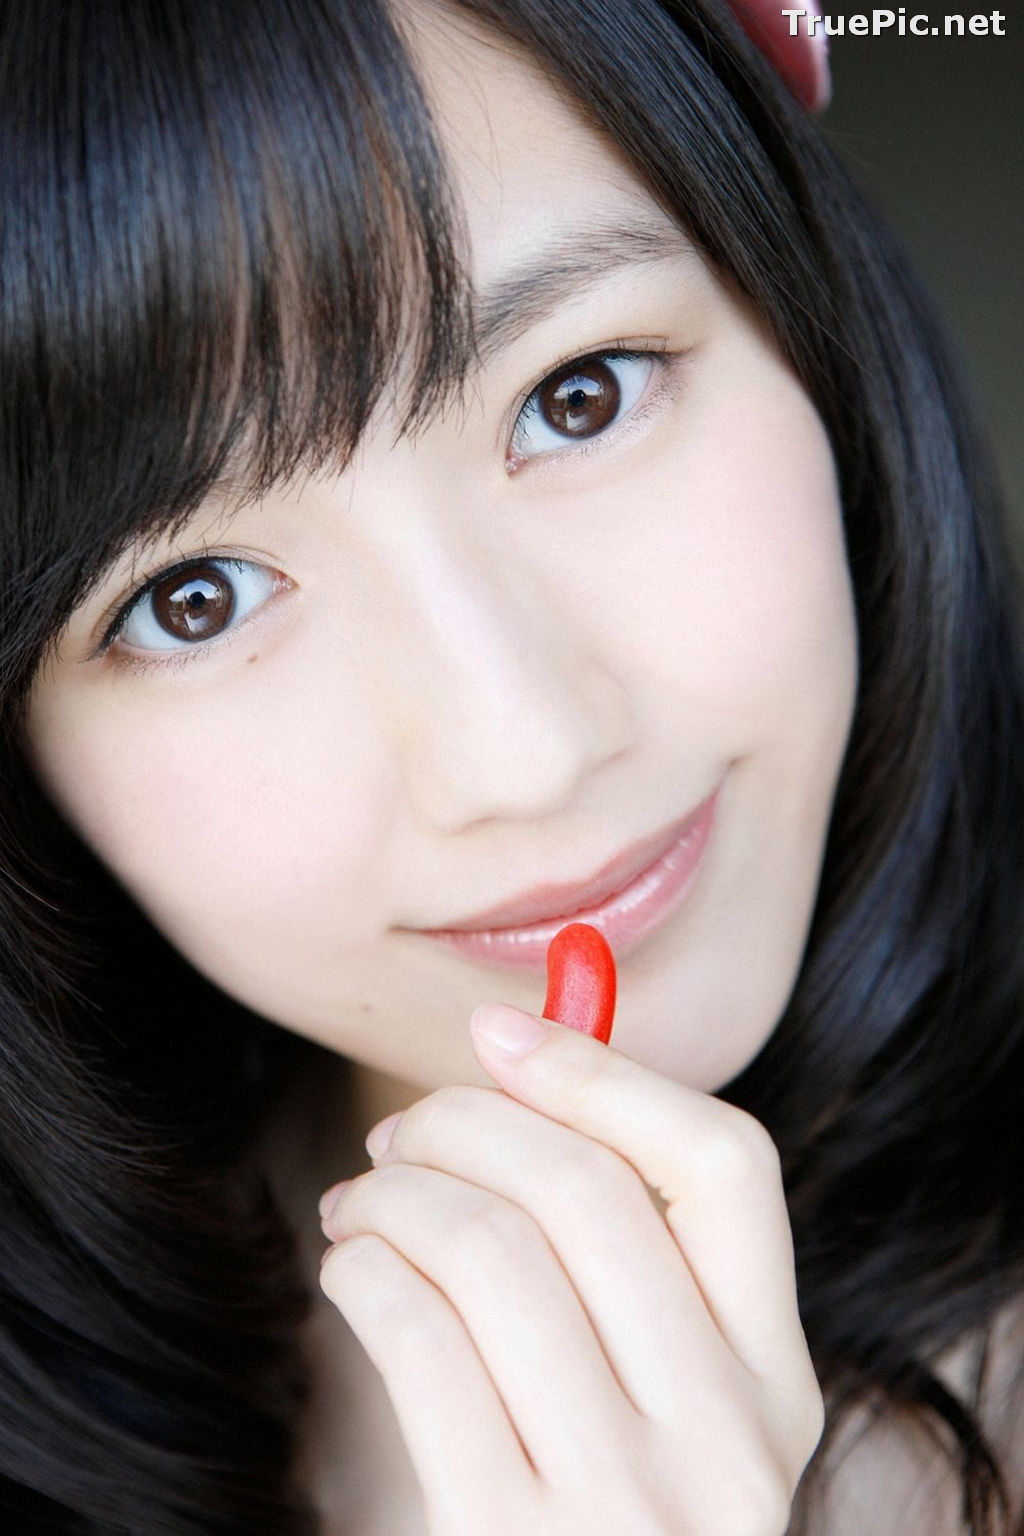 Image [YS Web] Vol.531 - Japanese Idol Girl Group (AKB48) - Mayu Watanabe - TruePic.net - Picture-60